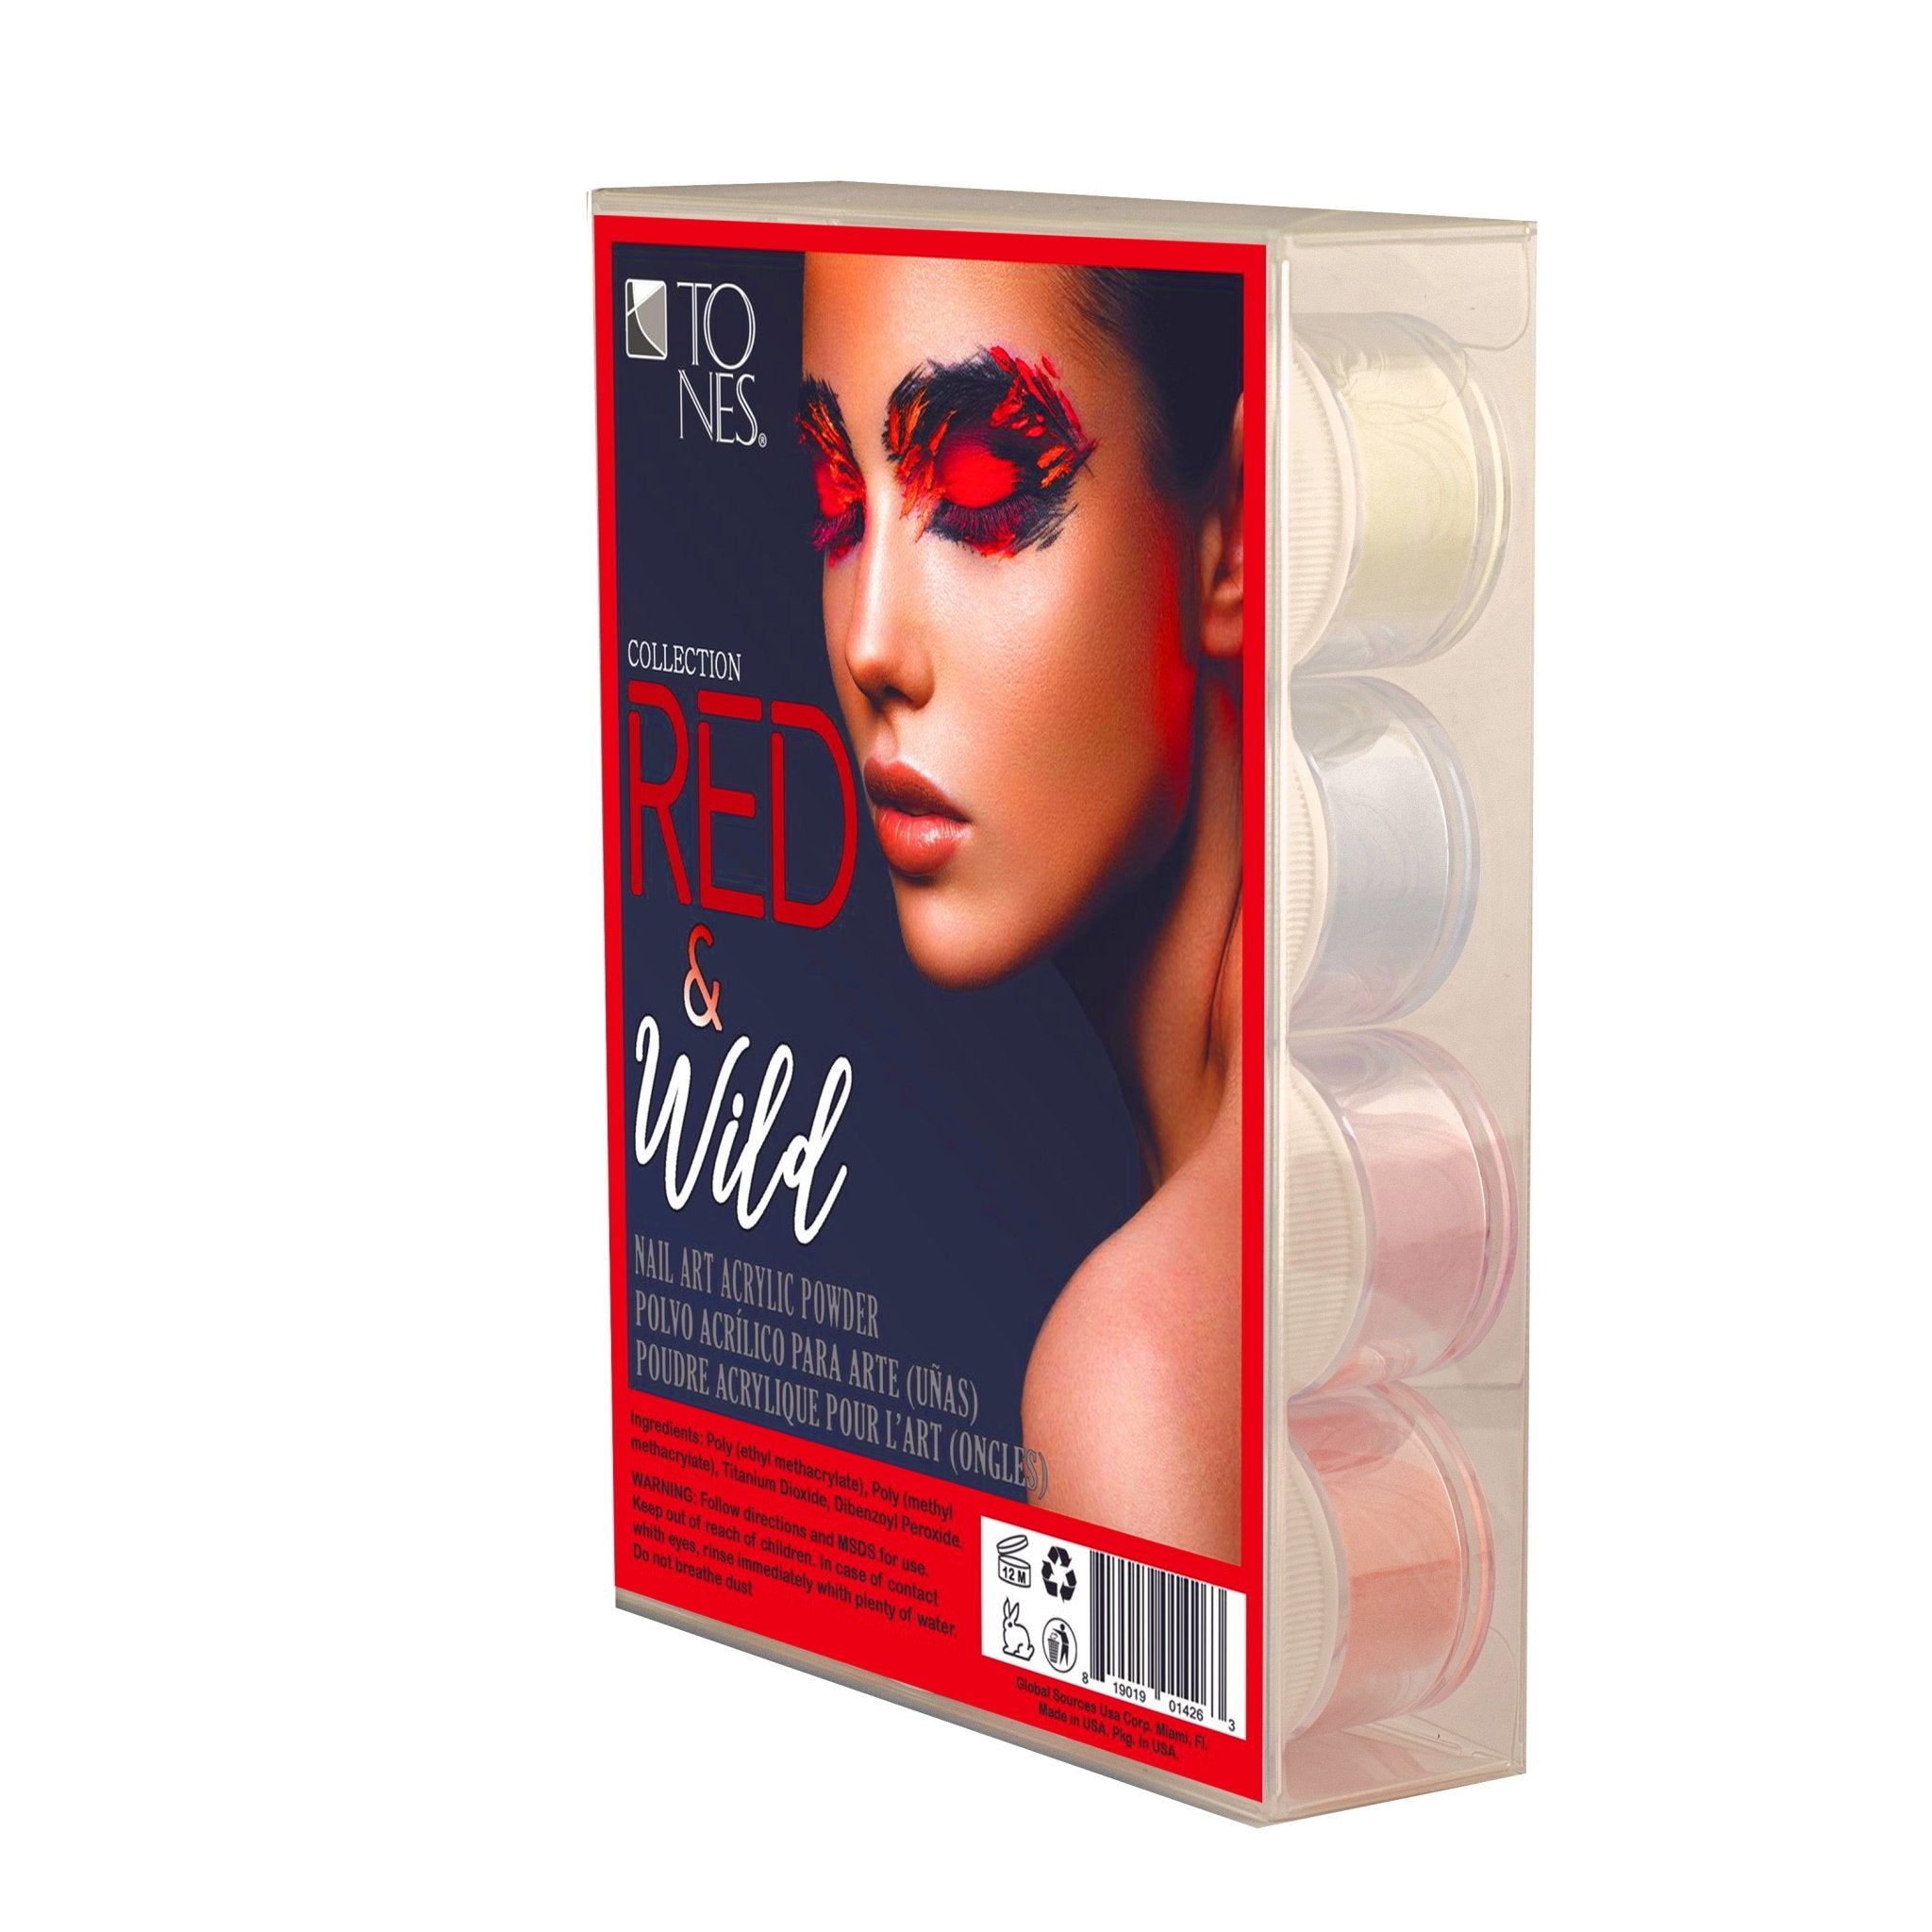 Acrylic Art Powder - 3D Collection: Red & Wild (12 x 0.25 oz) - Tones